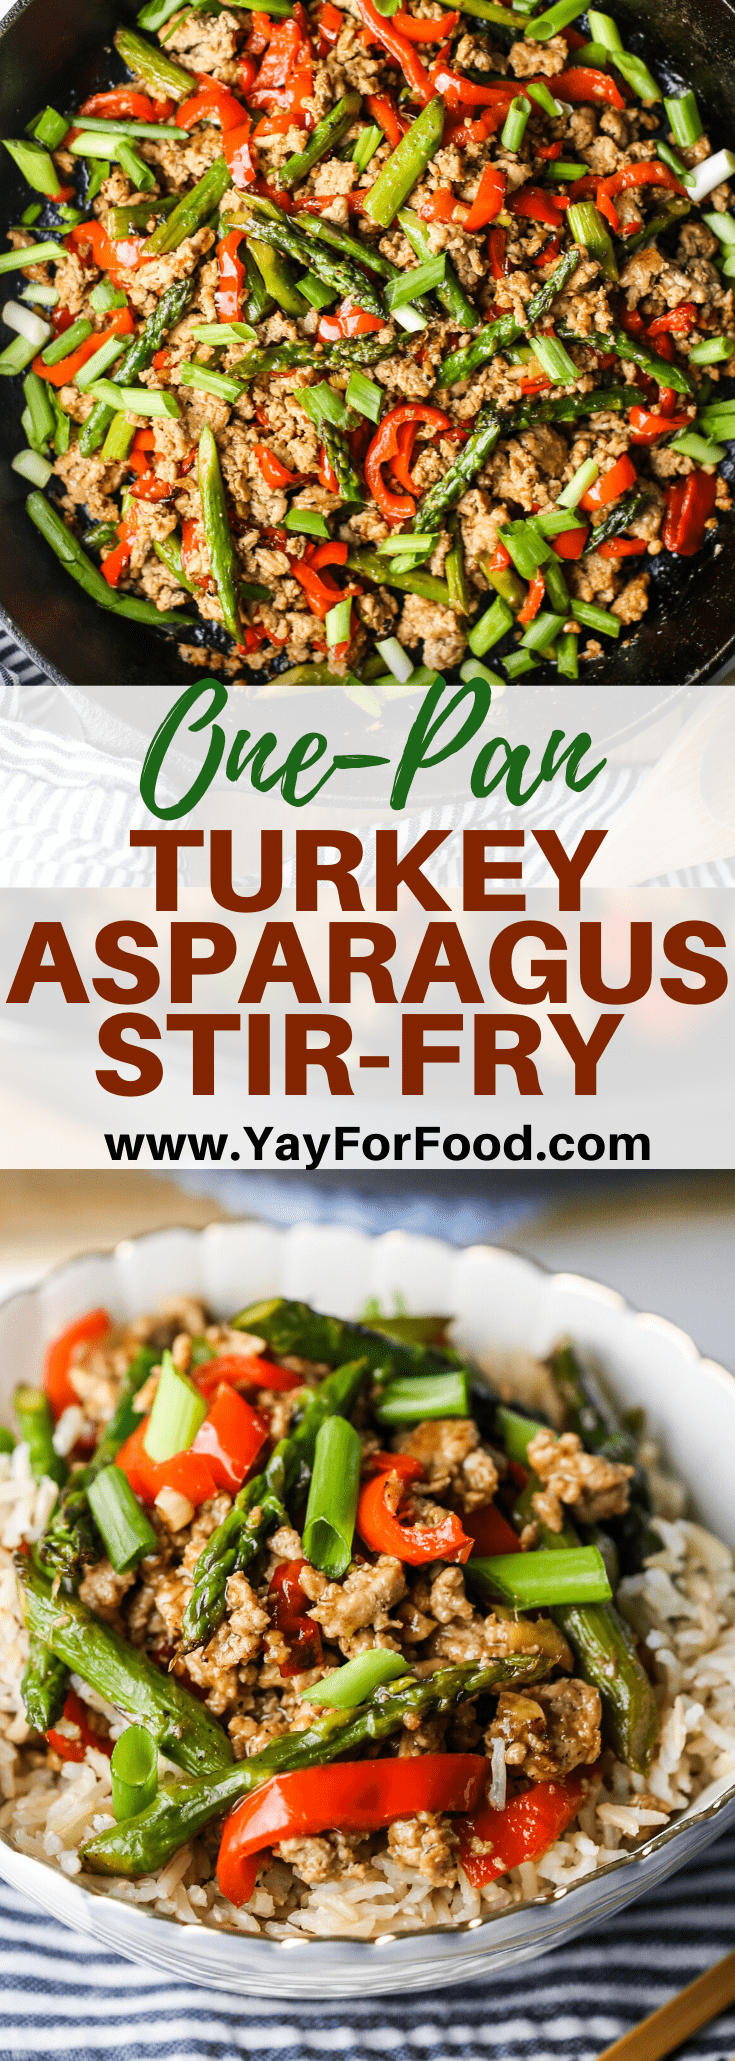 One-Pan Turkey Asparagus Stir-Fry - Yay! For Food